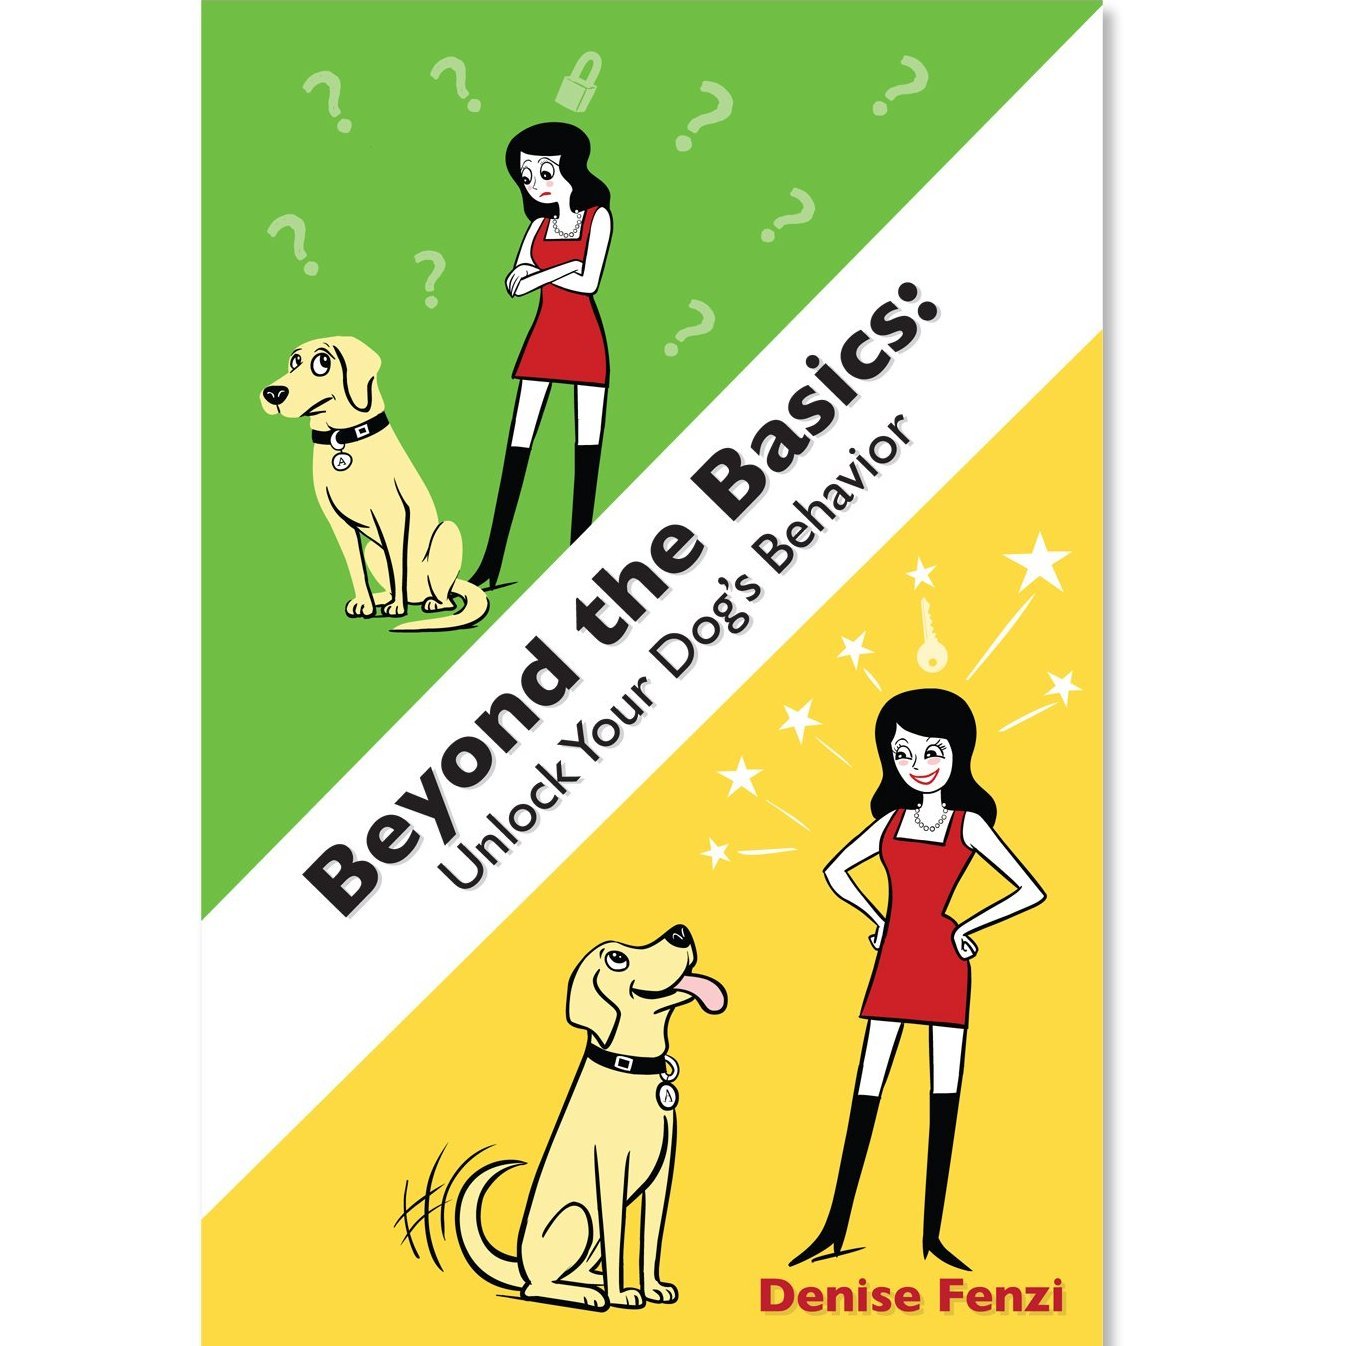 Beyond The Basics - Unlock your Dog's Behavior by Denise Fenzi